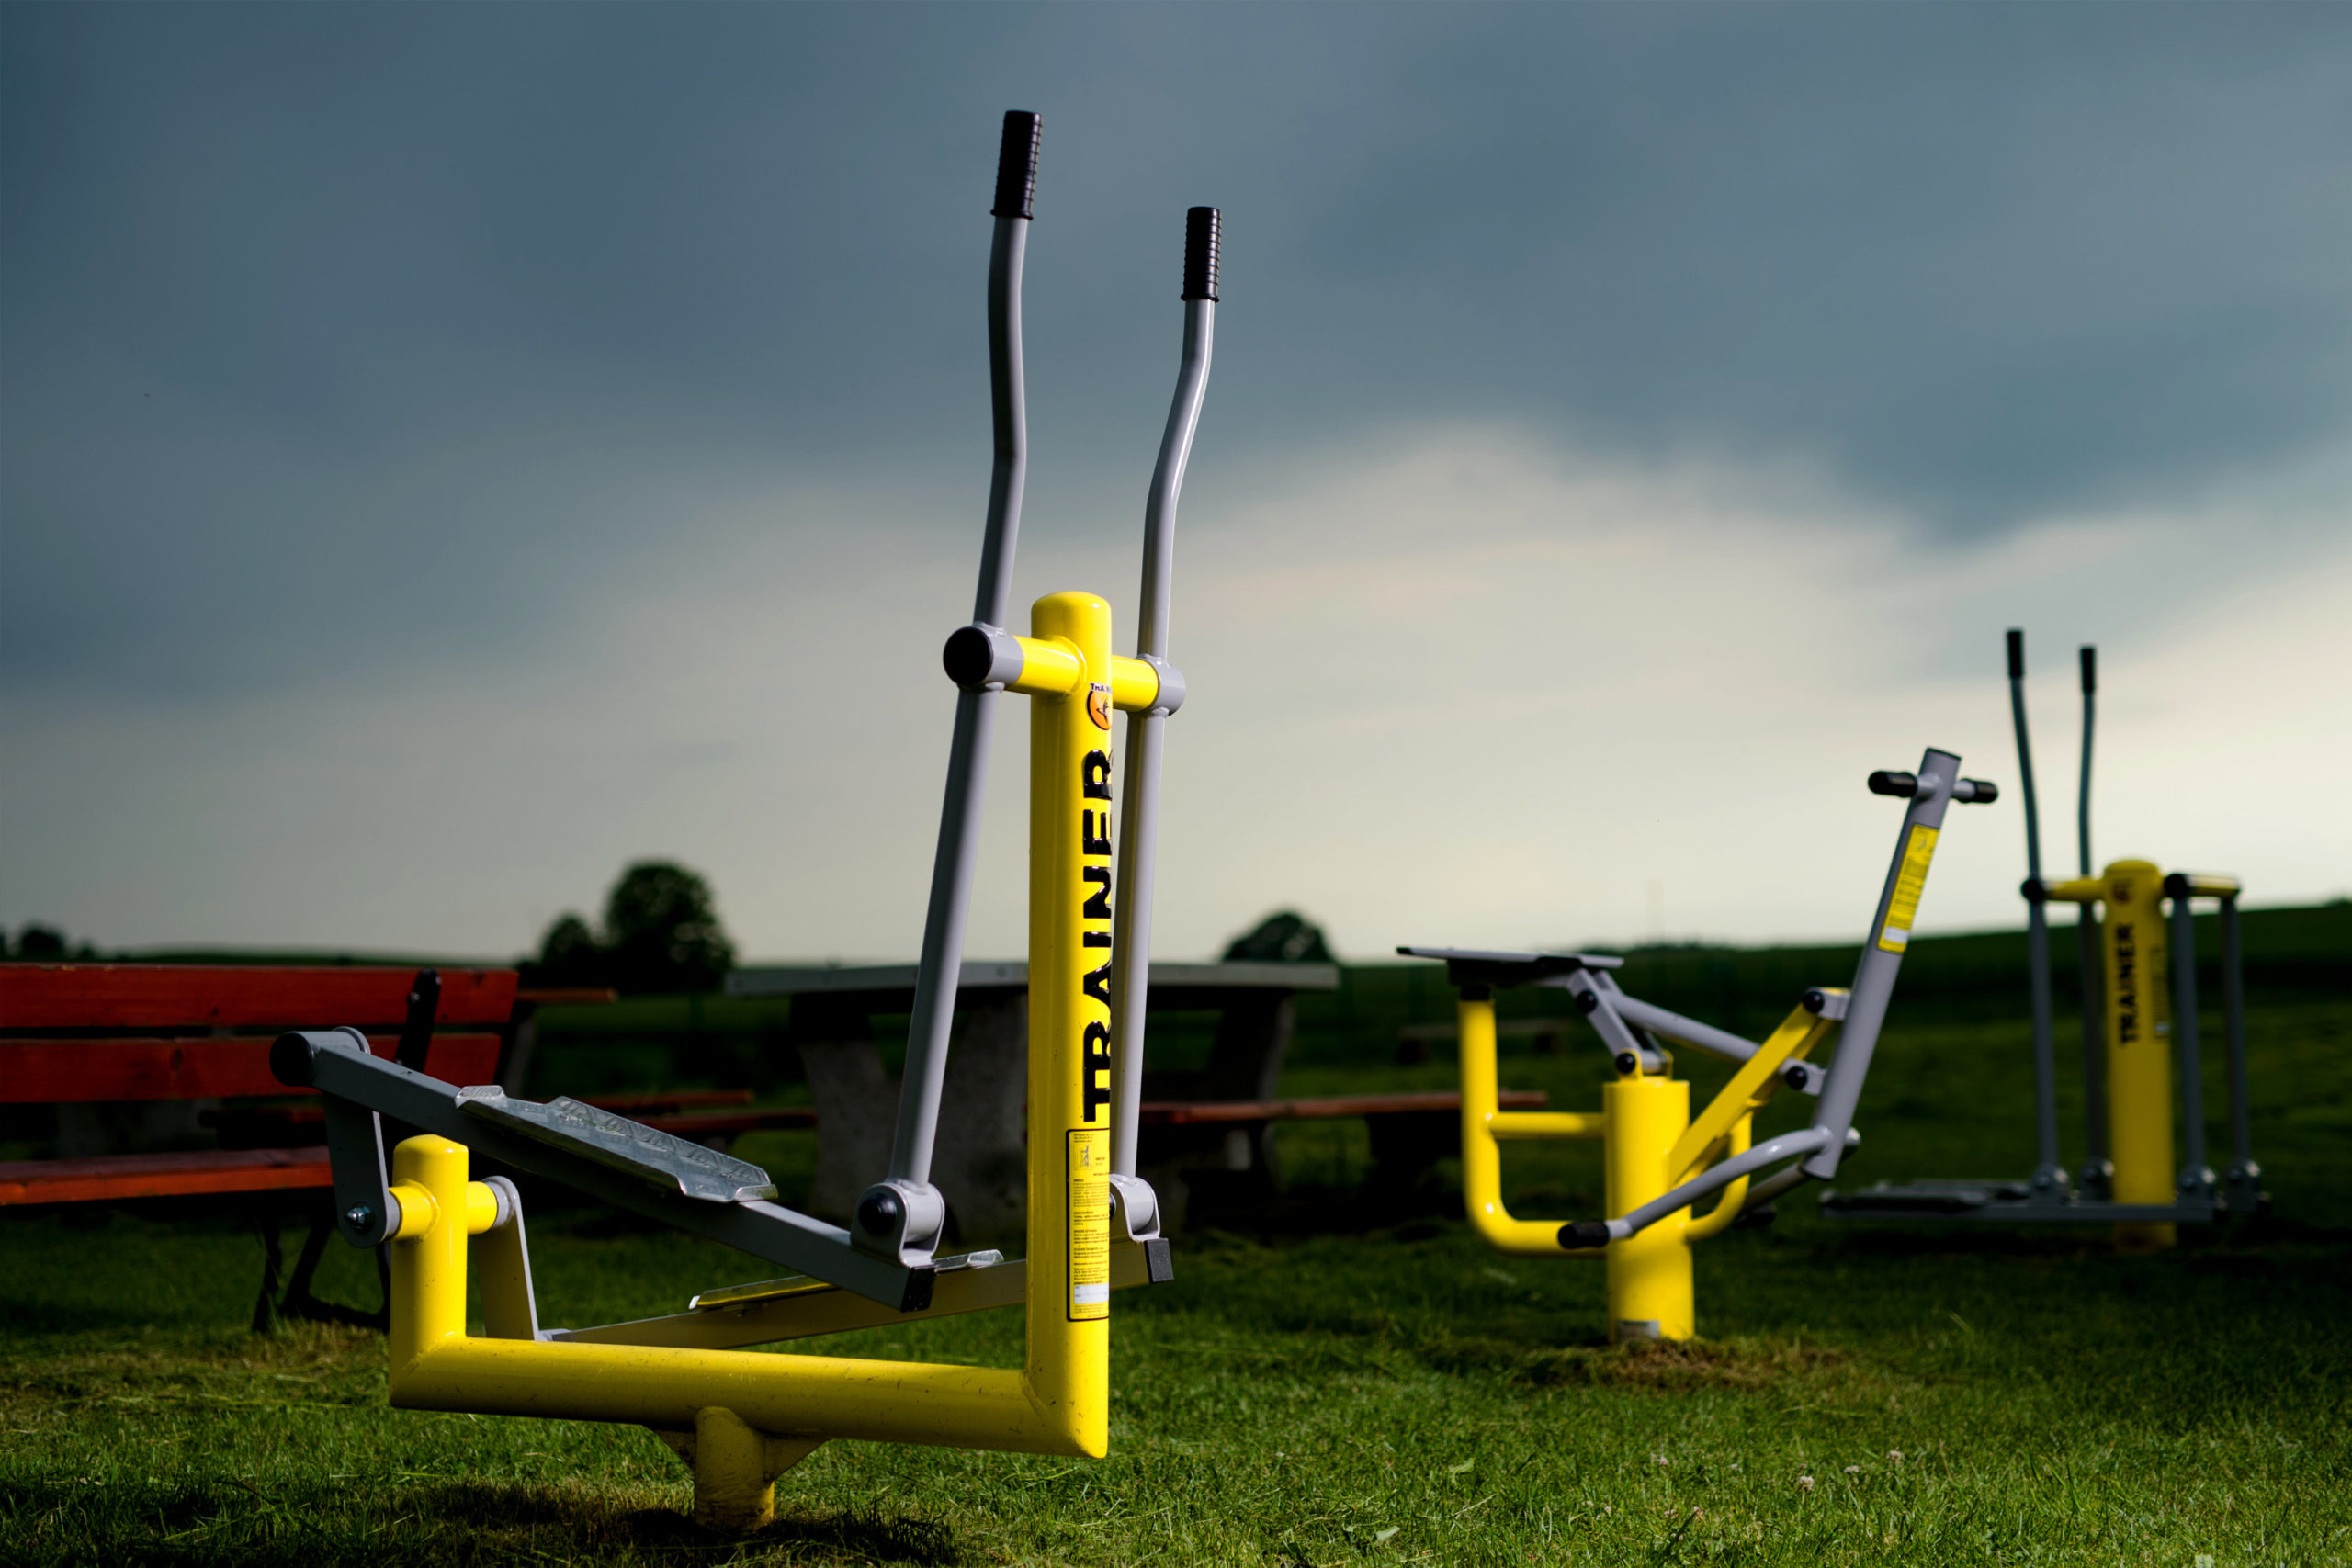 Outdoor gym equipment